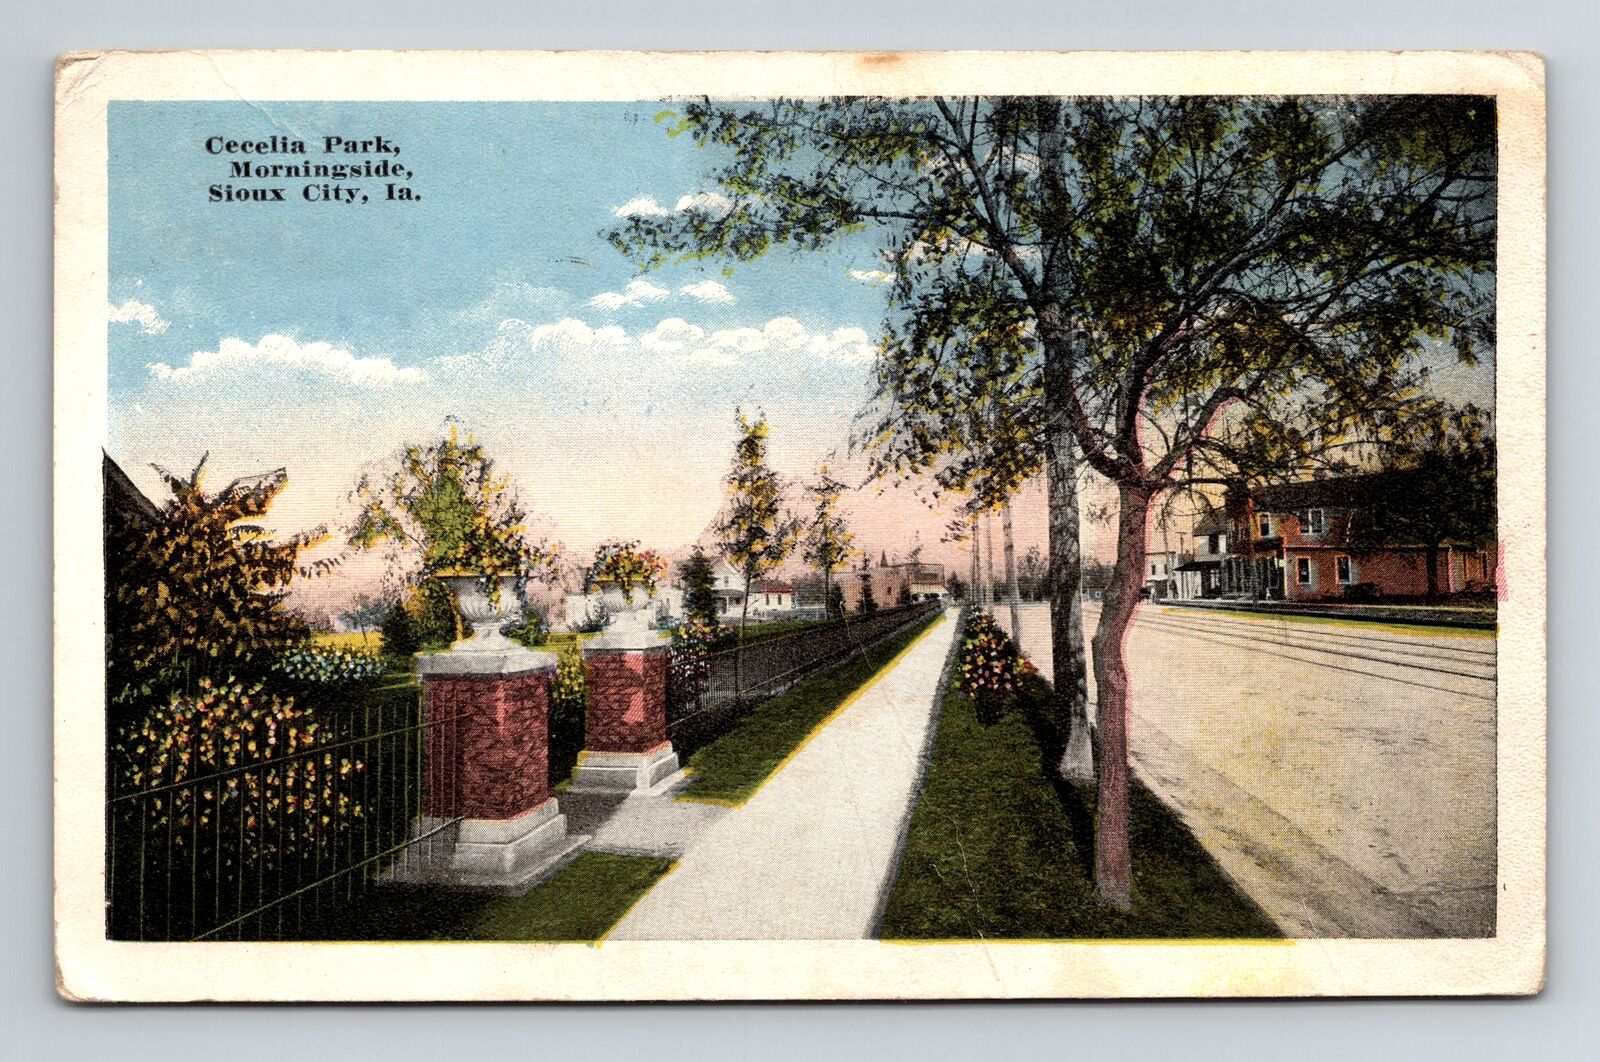 Sioux City IA-Iowa, Cecelia Park, Morningside, c1916 Vintage Postcard